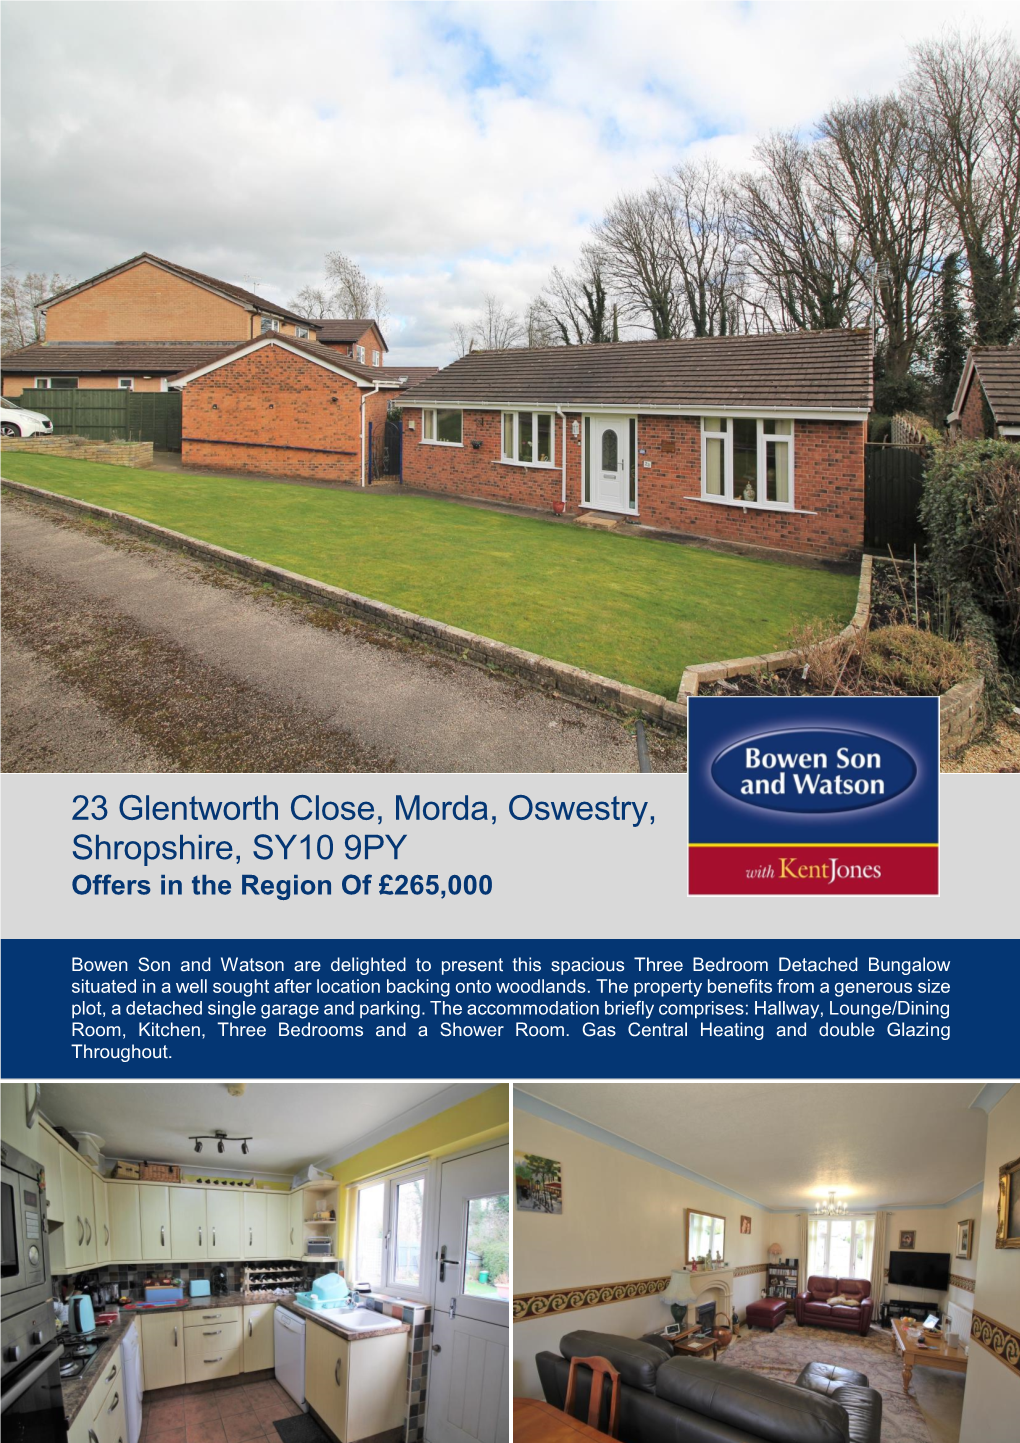 23 Glentworth Close, Morda, Oswestry, Shropshire, SY10 9PY Offers in the Region of £265,000